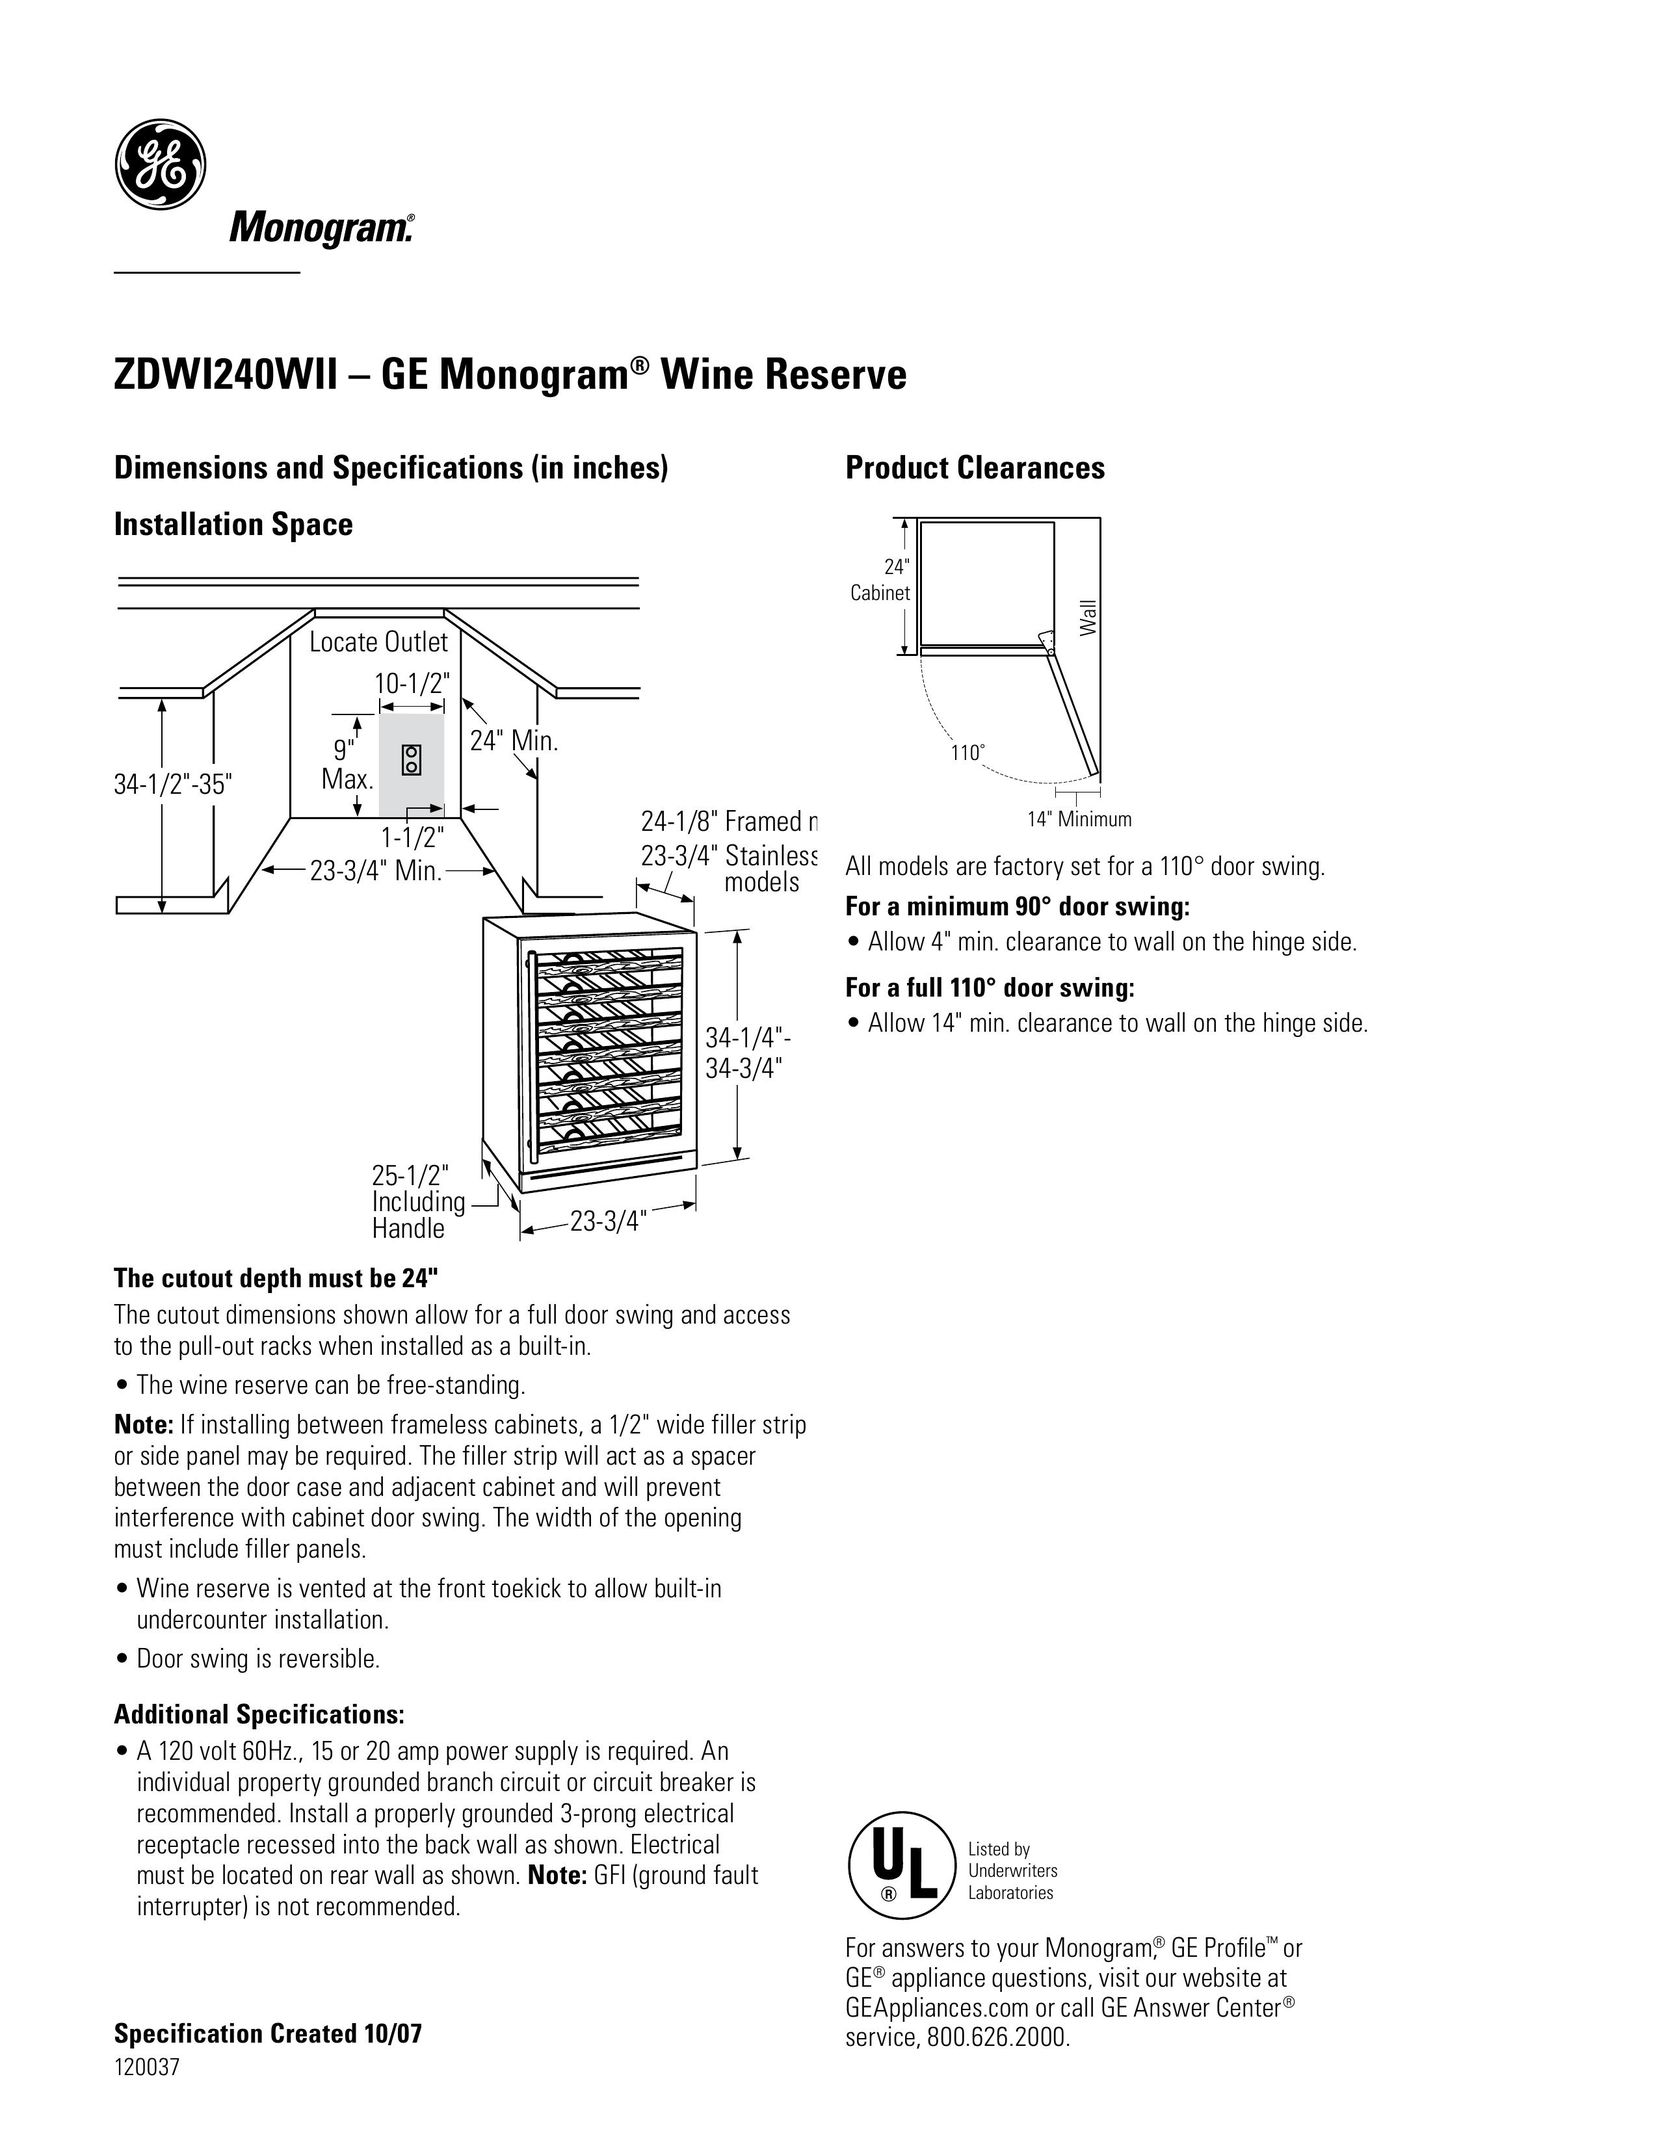 GE ZDWI240WII Beverage Dispenser User Manual